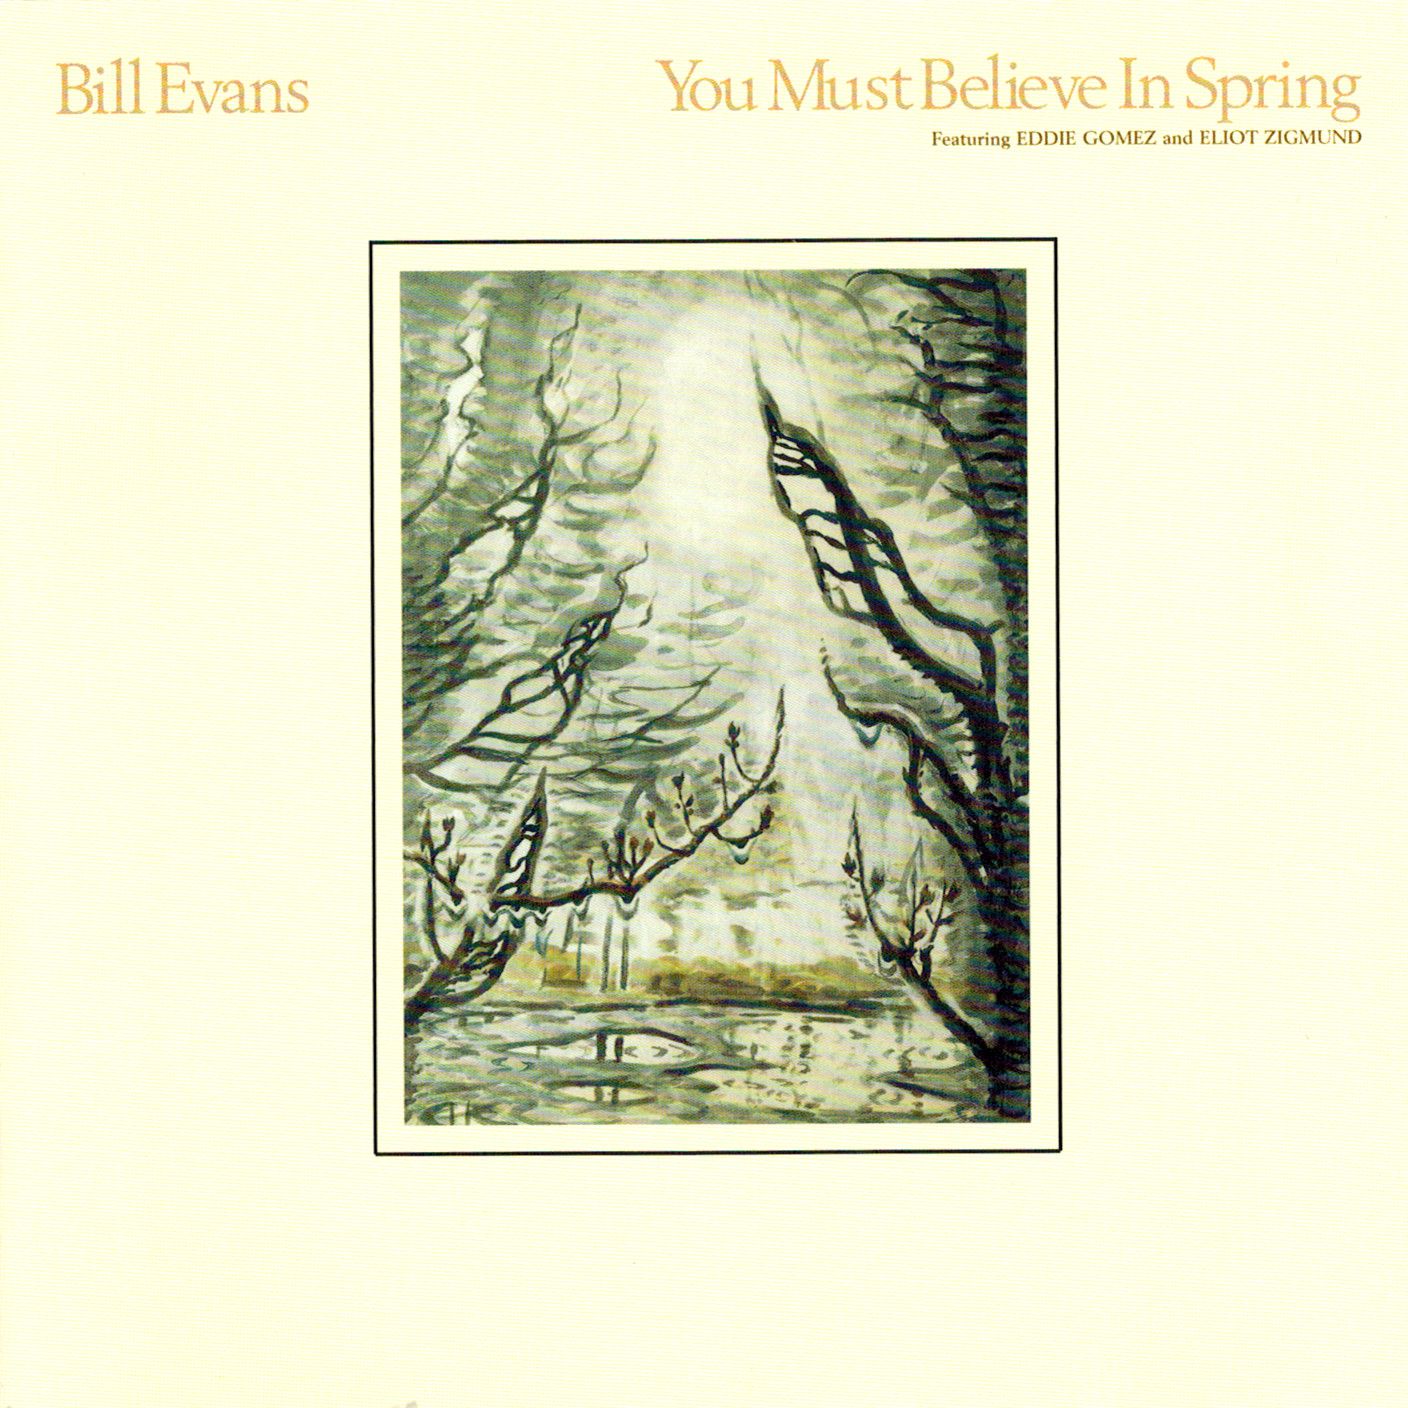 Bill Evans You must believe in spring